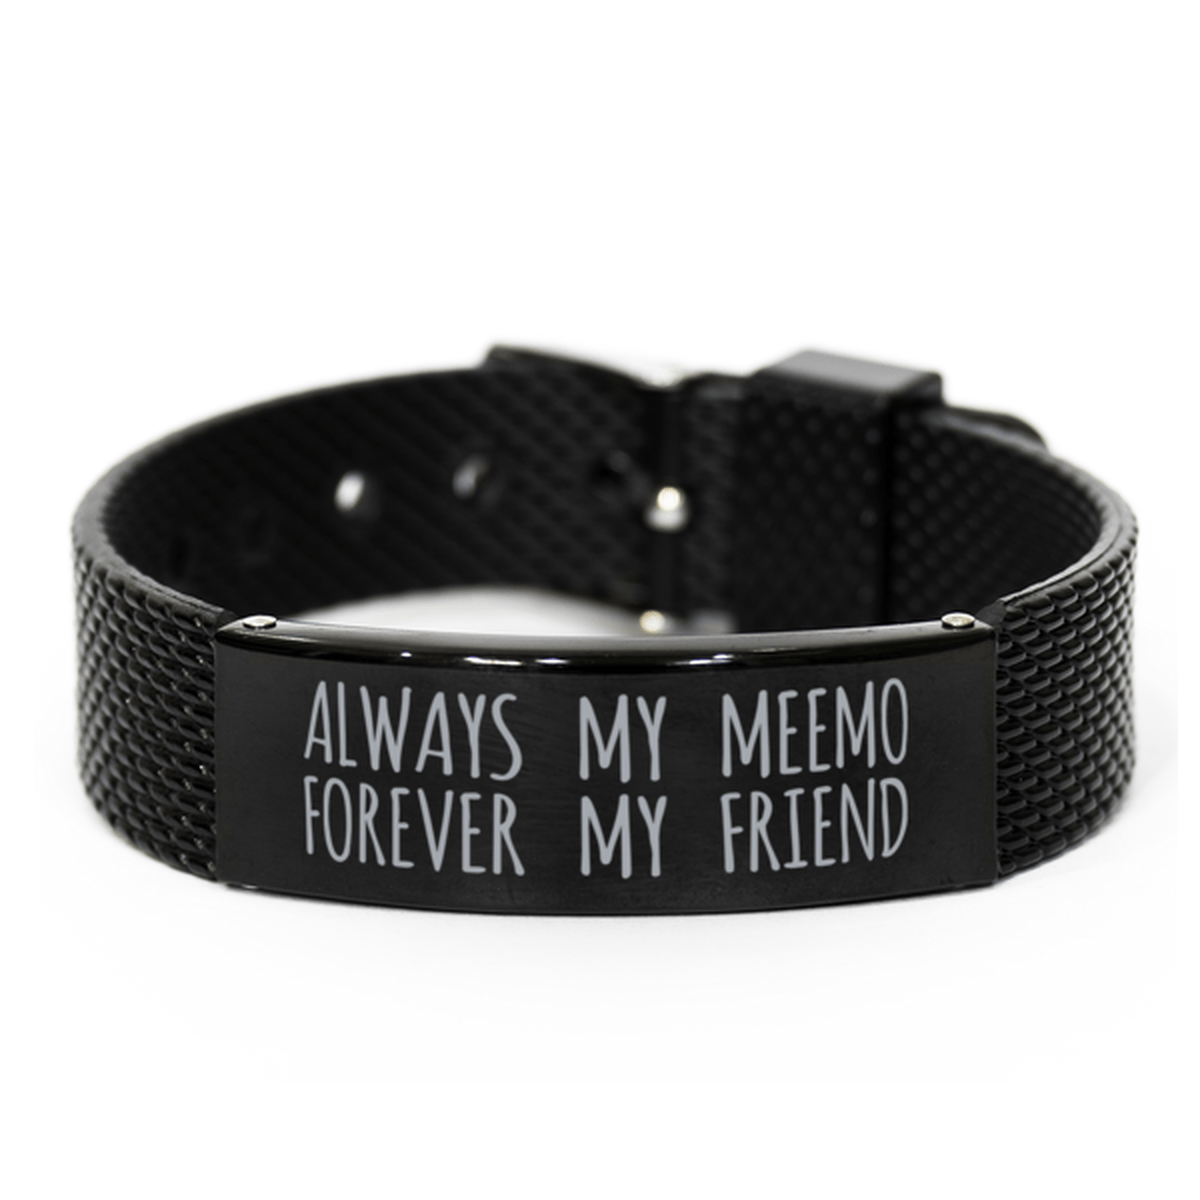 Inspirational Meemo Black Shark Mesh Bracelet, Always My Meemo Forever My Friend, Best Birthday Gifts for Family Friends